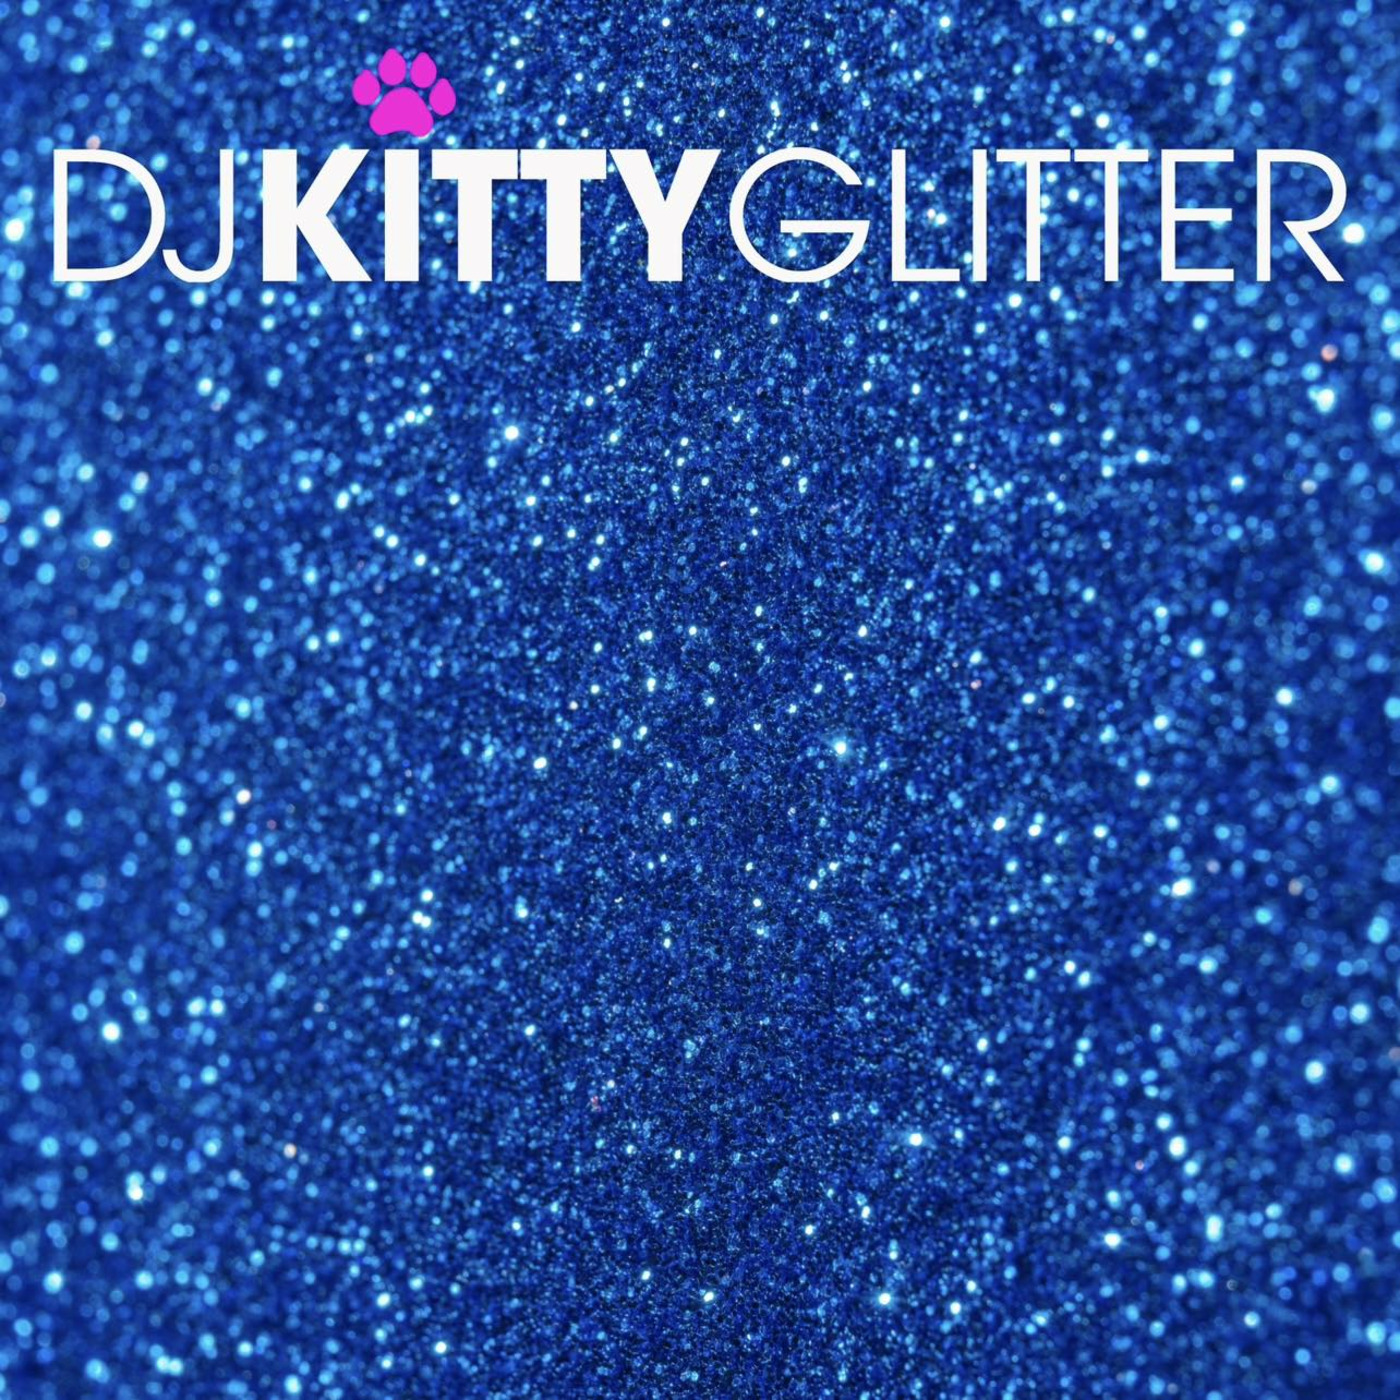 Episode 214: DJ KITTY GLITTER MIXSET #141